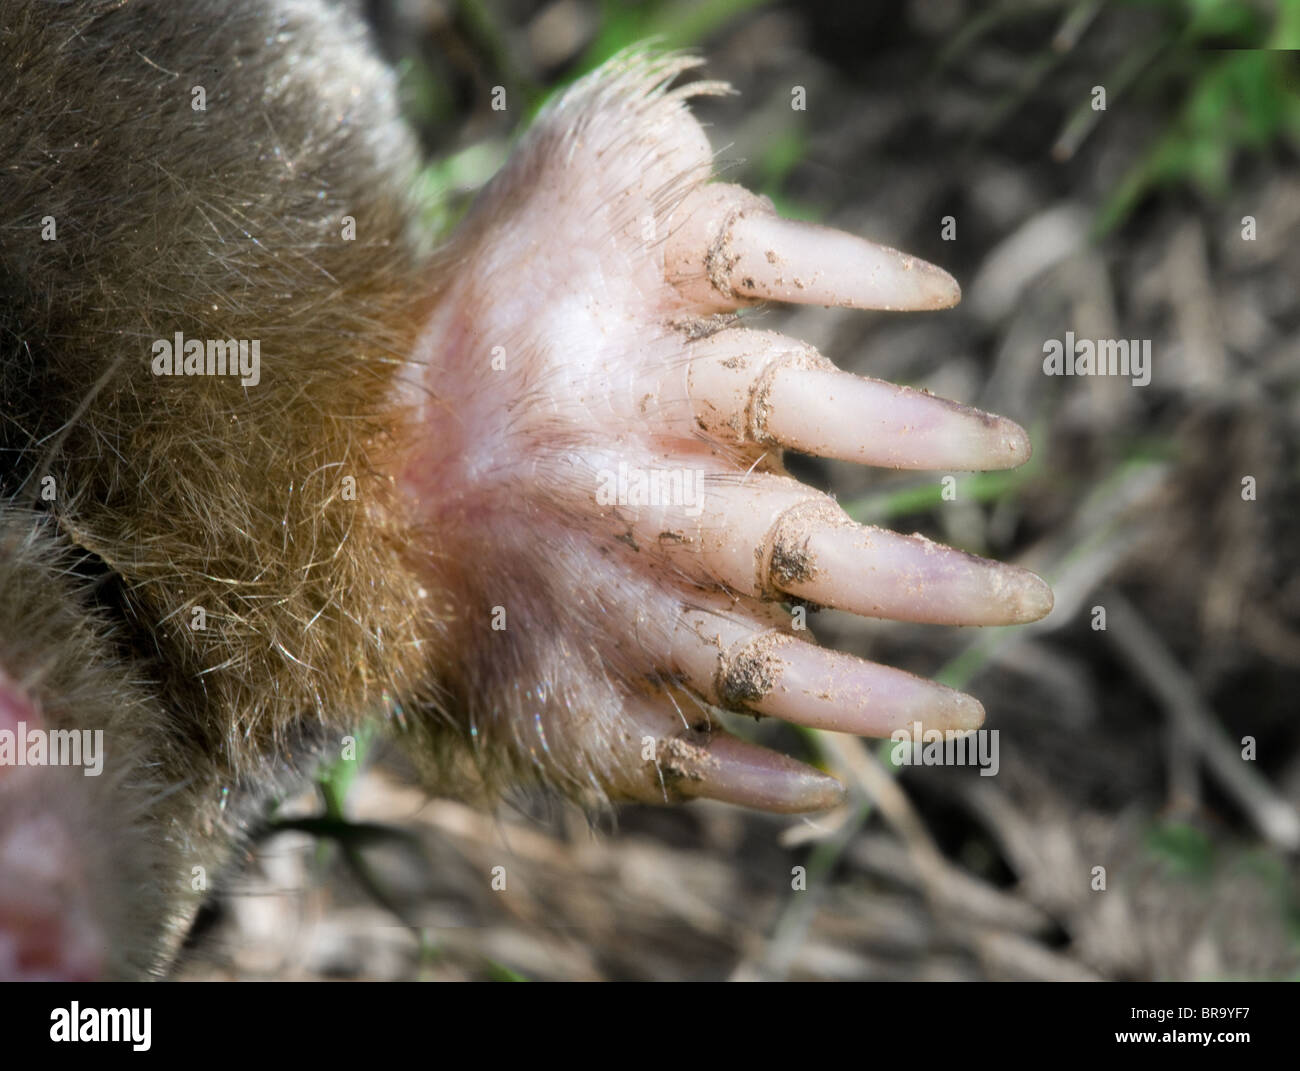 Delicate yet powerful hand of a mole Talpa europaea Stock Photo